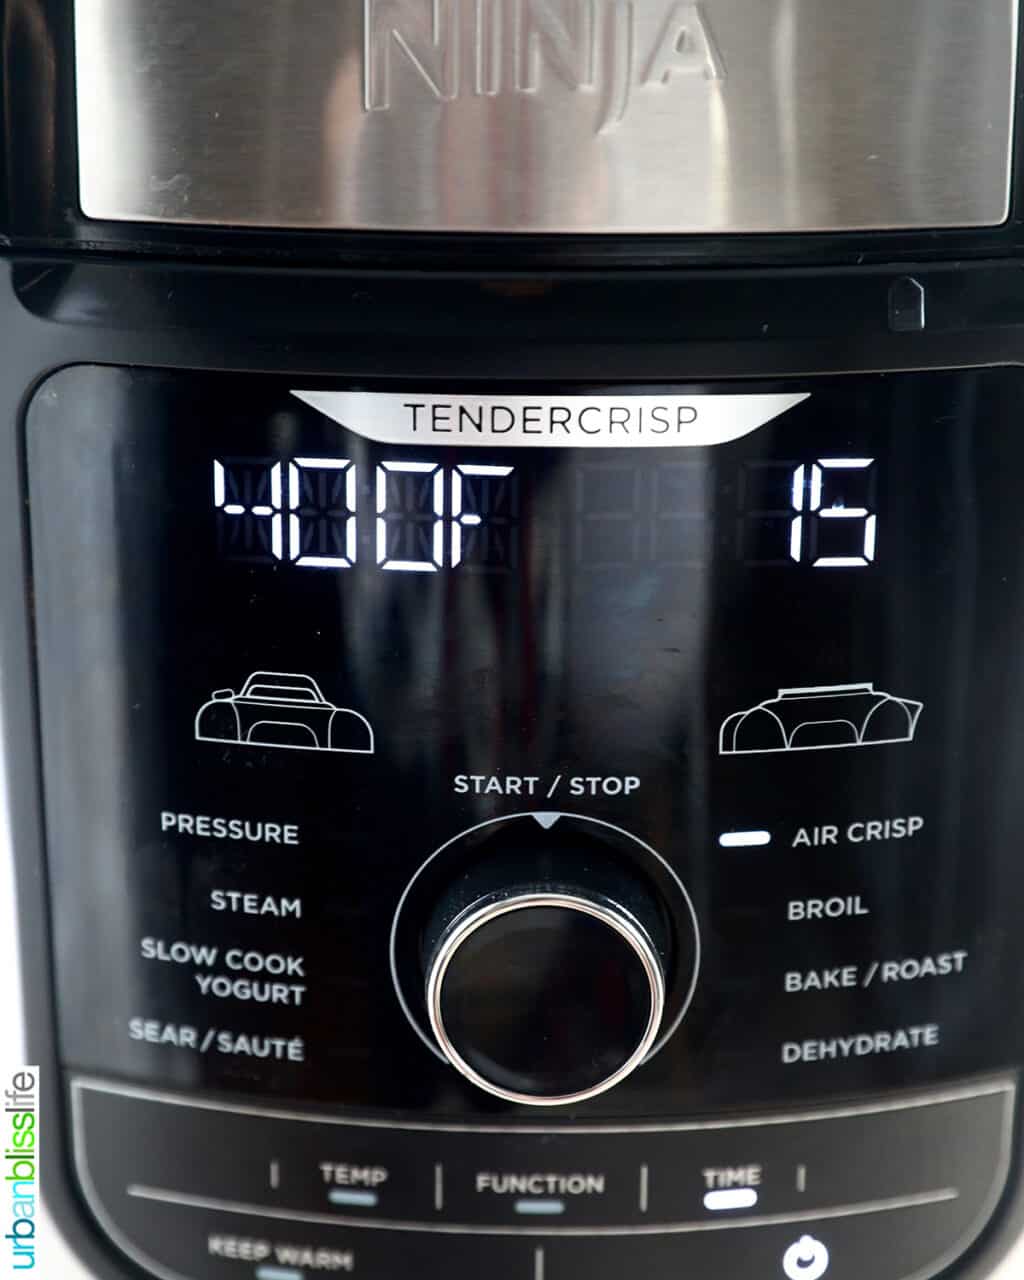 Ninja Foodi Air Fryer 400 degrees 15 minutes